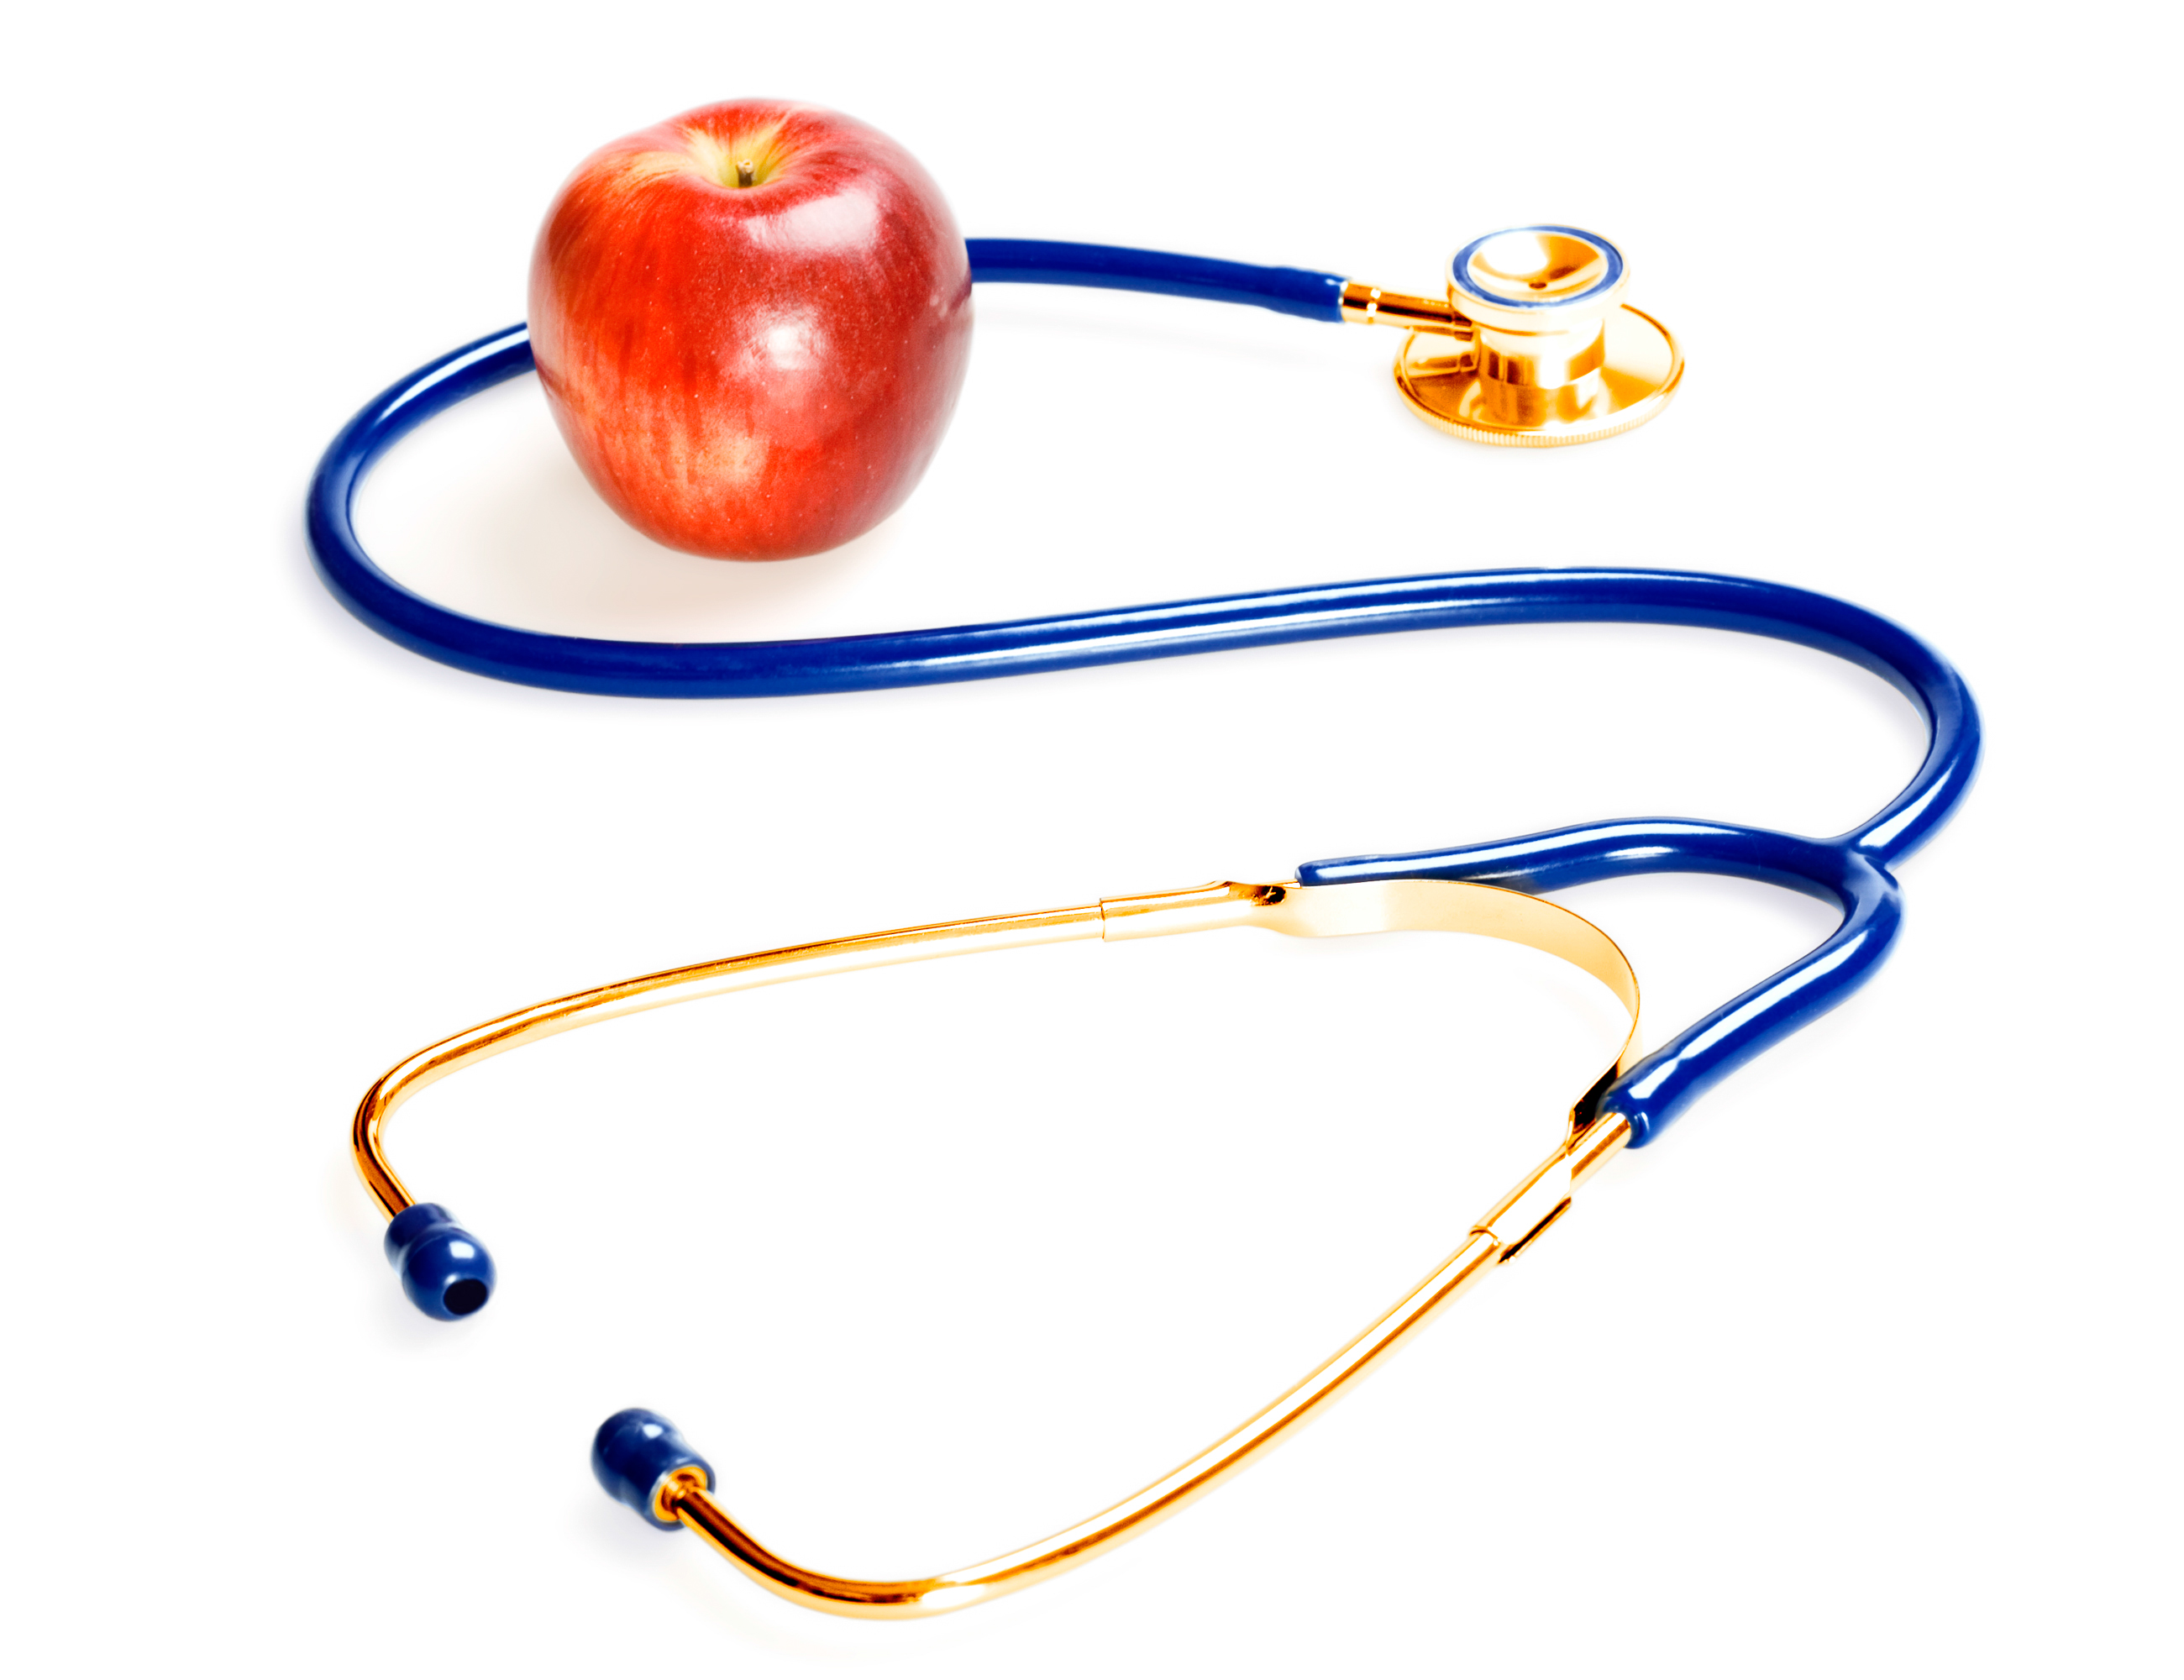 Stethoscope and apple photo